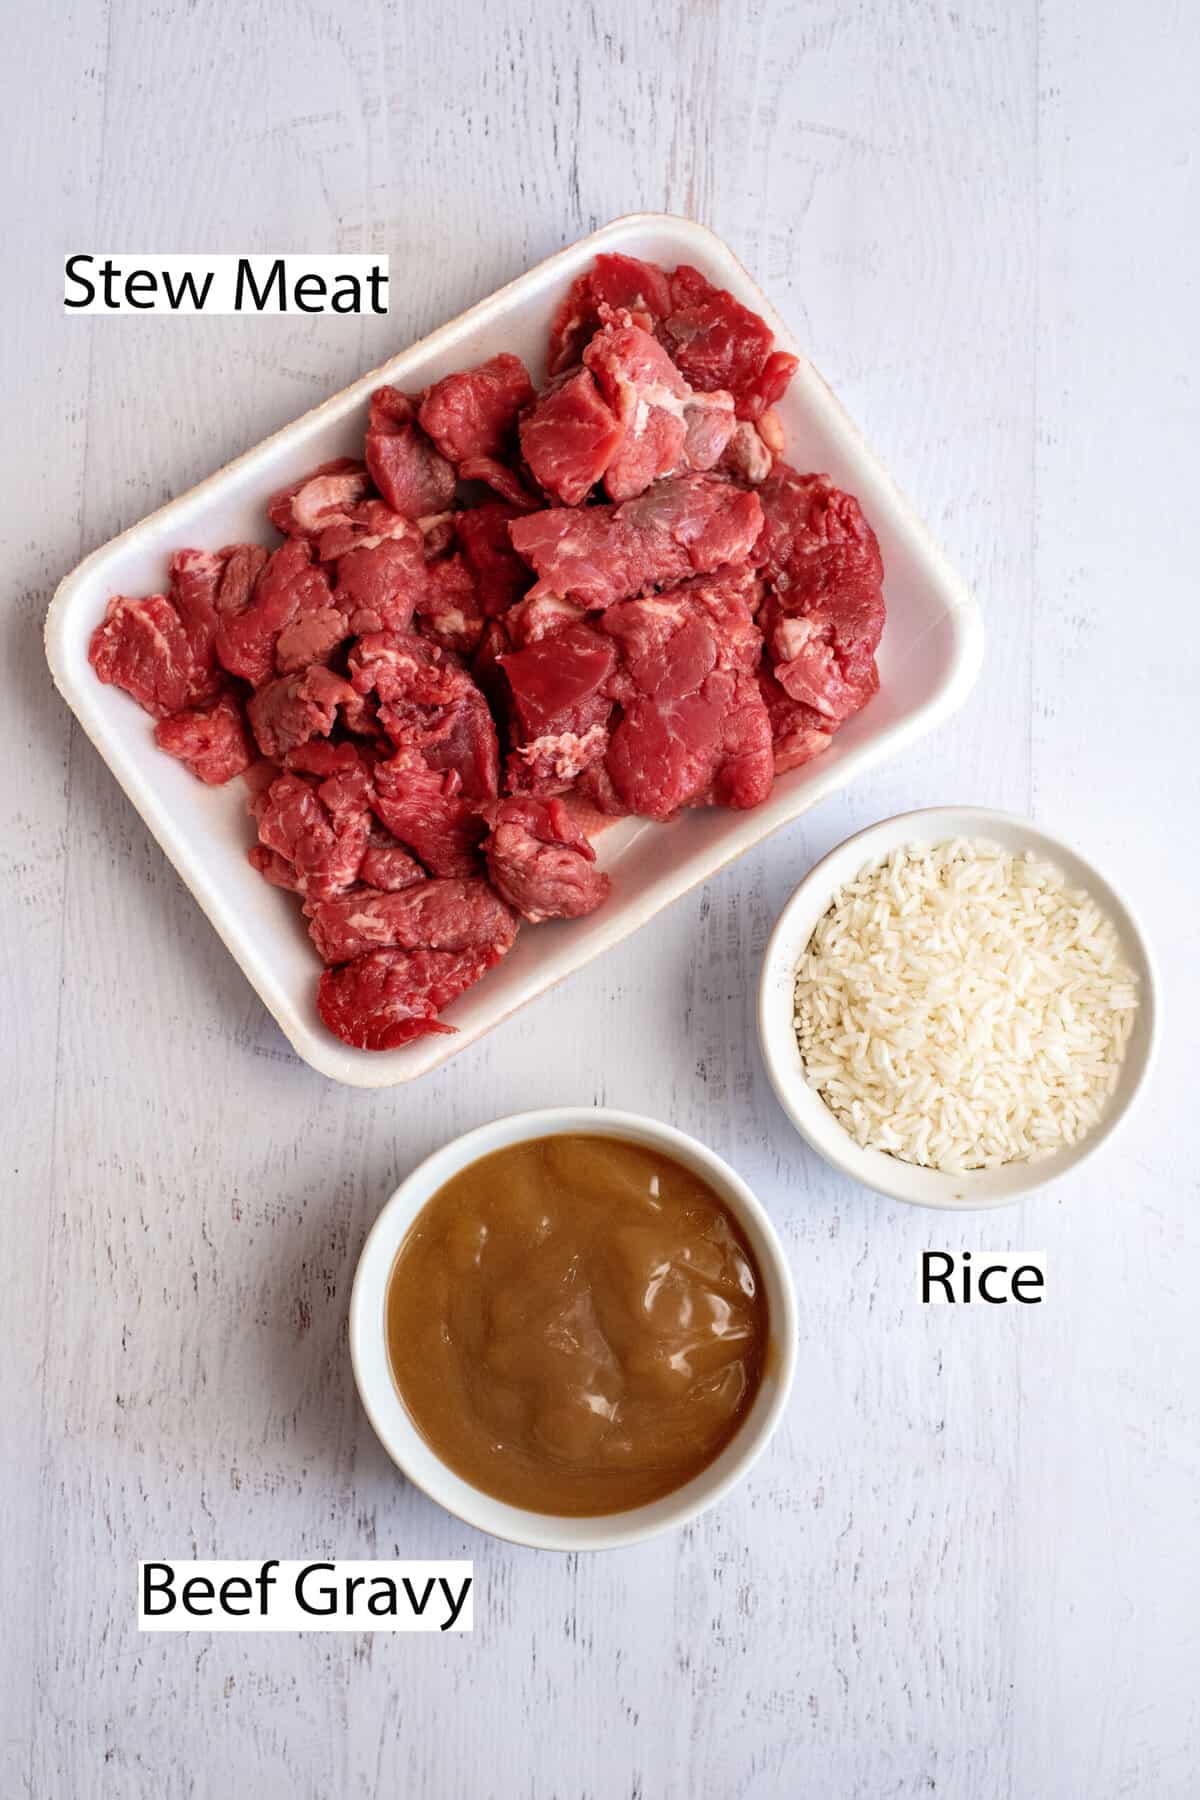 steak tips over rice ingredients